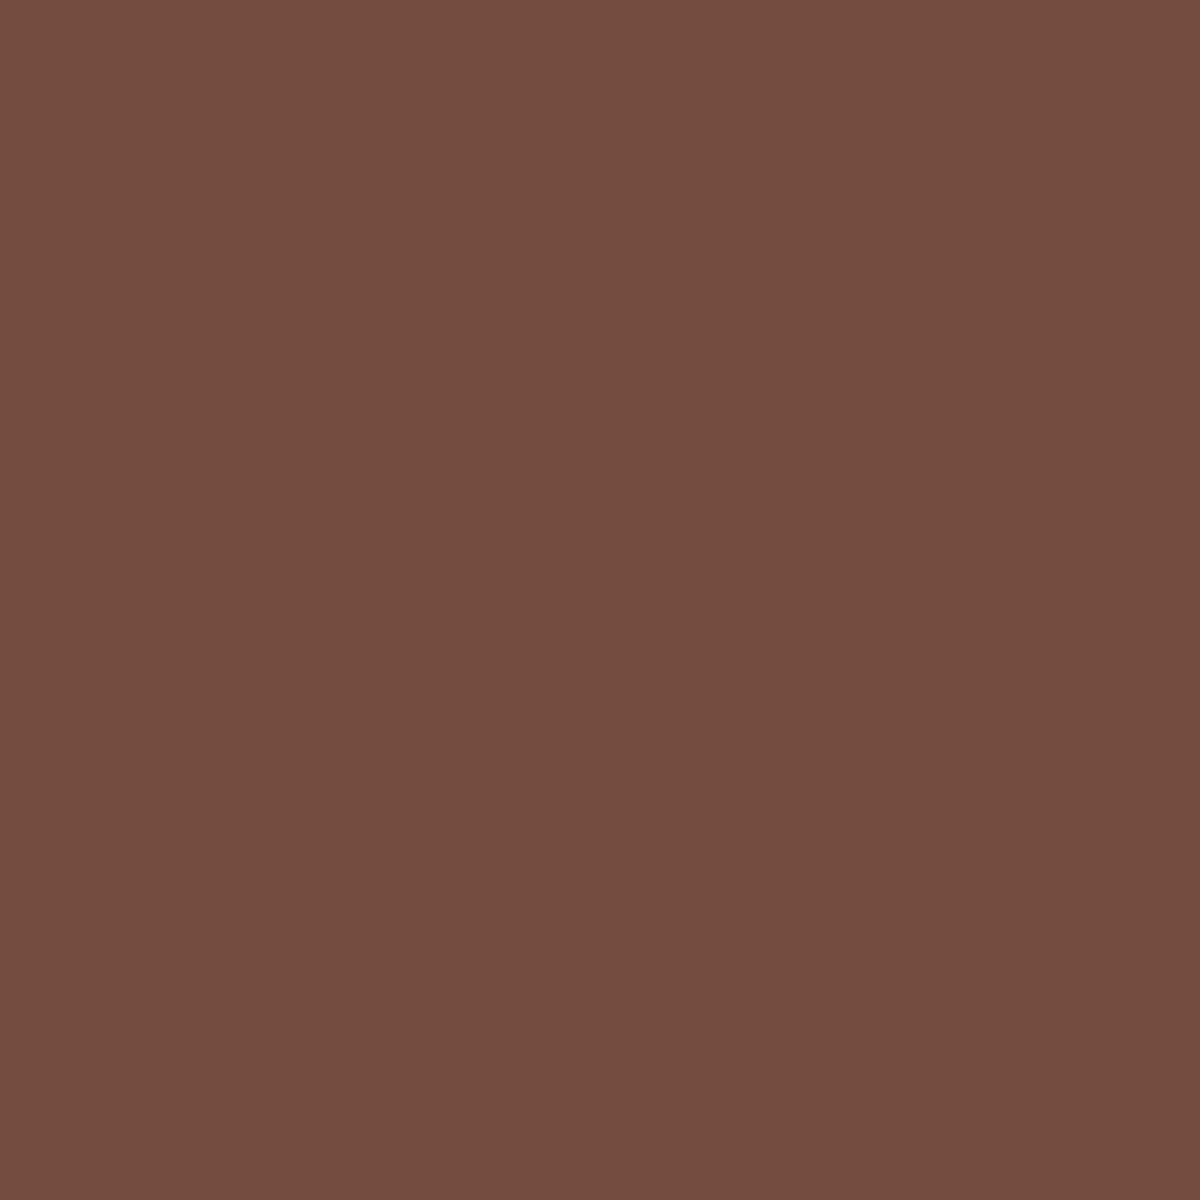 Cocoa Brown 2101-20